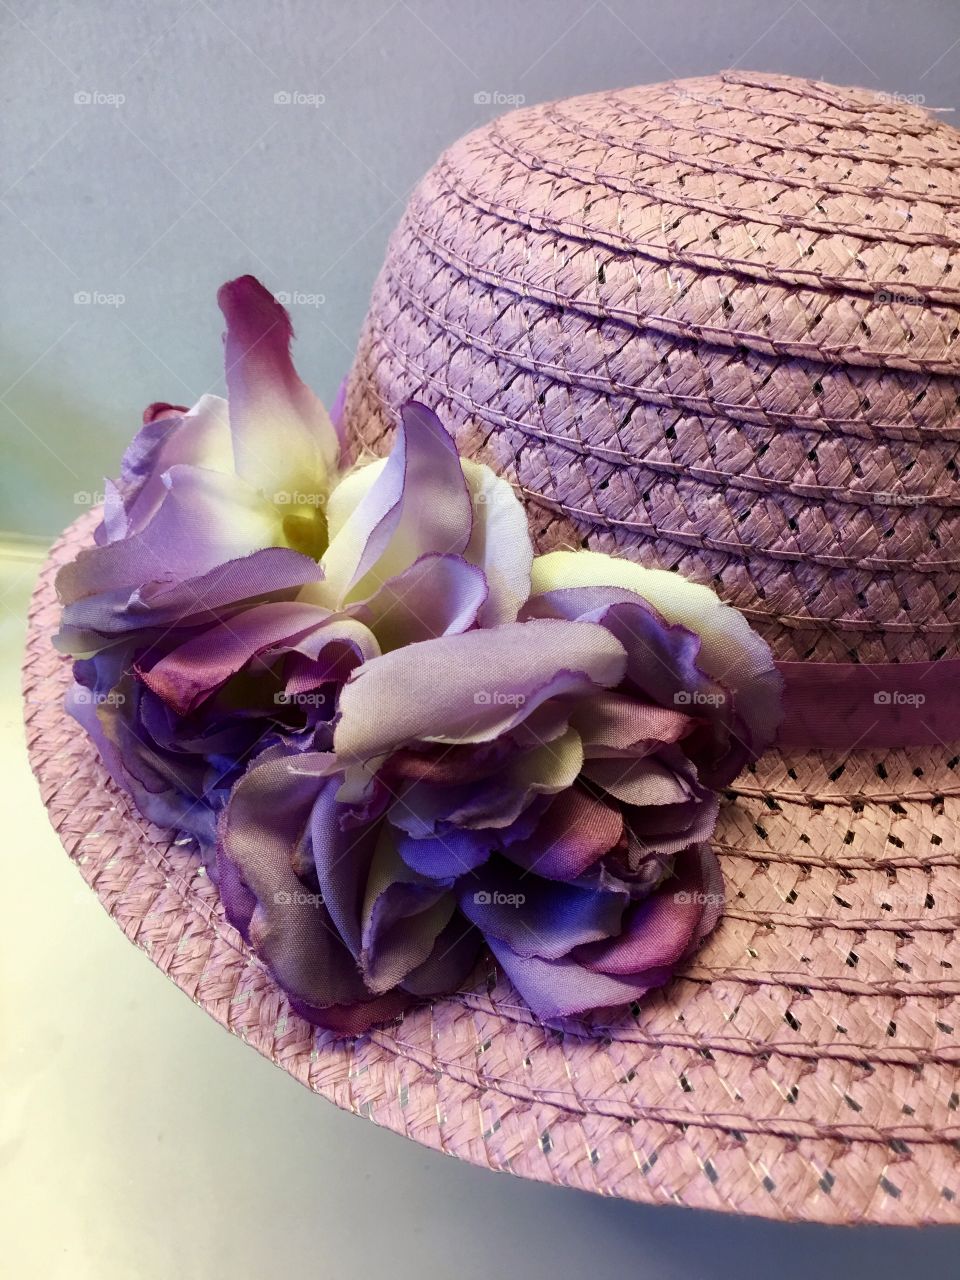 Closeup of purple hat